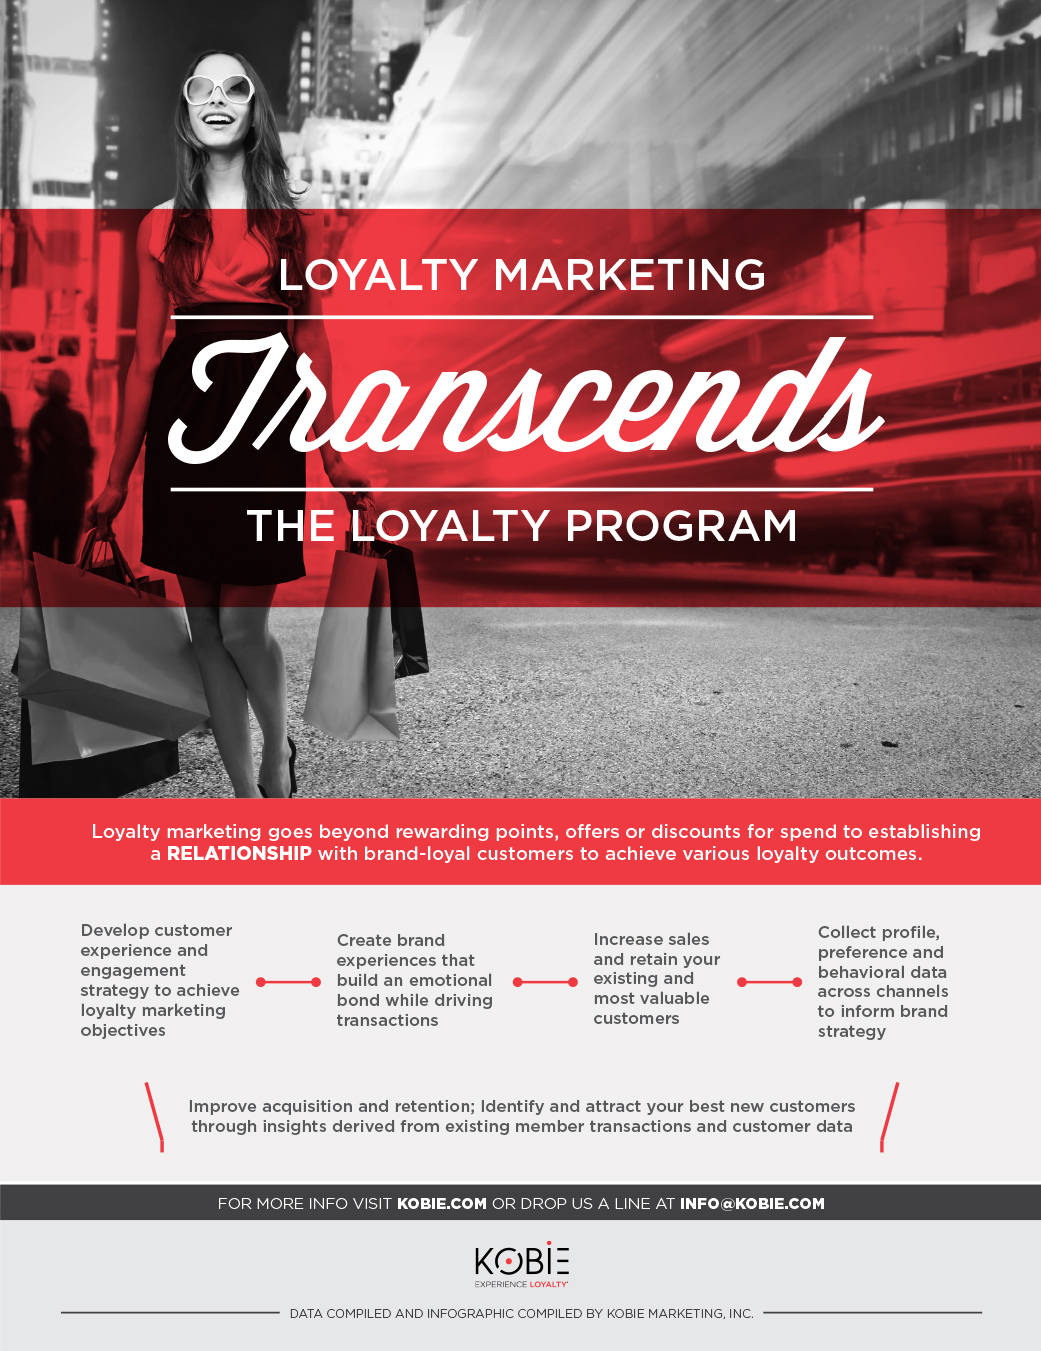 KWC-4482_Loyalty_Marketing_Infographic_Page1_resized